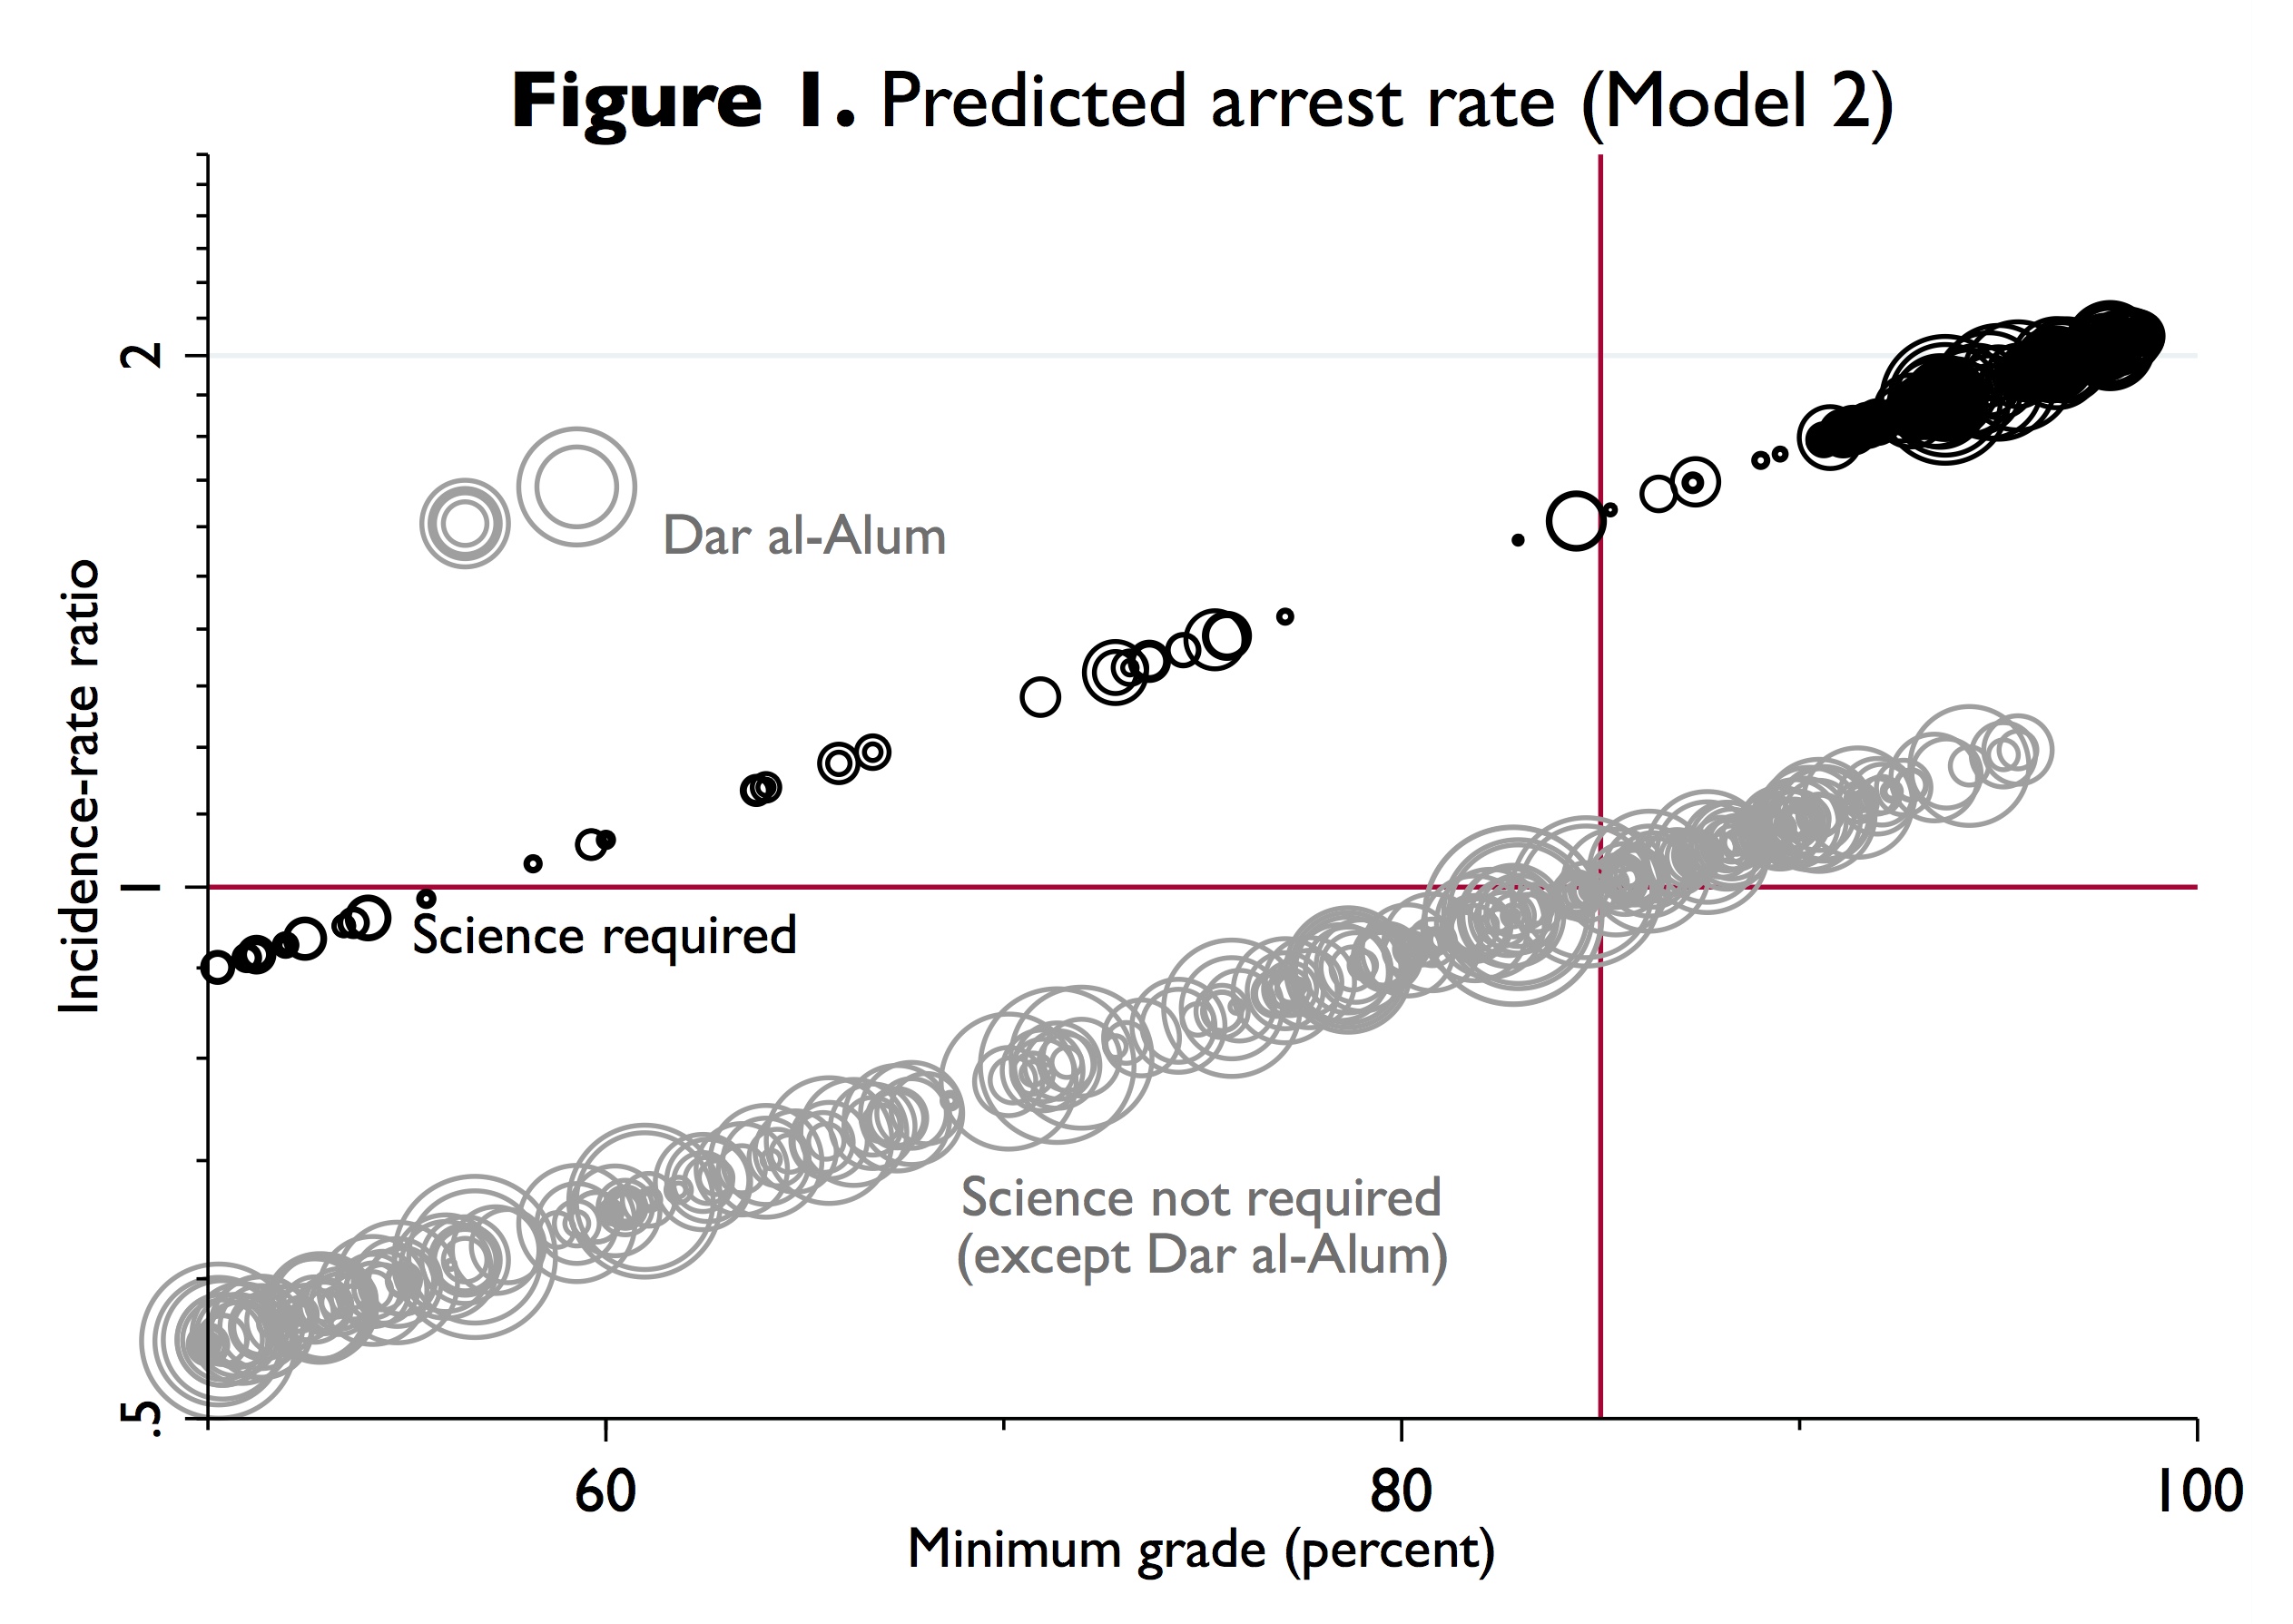 Predicted arrest rate